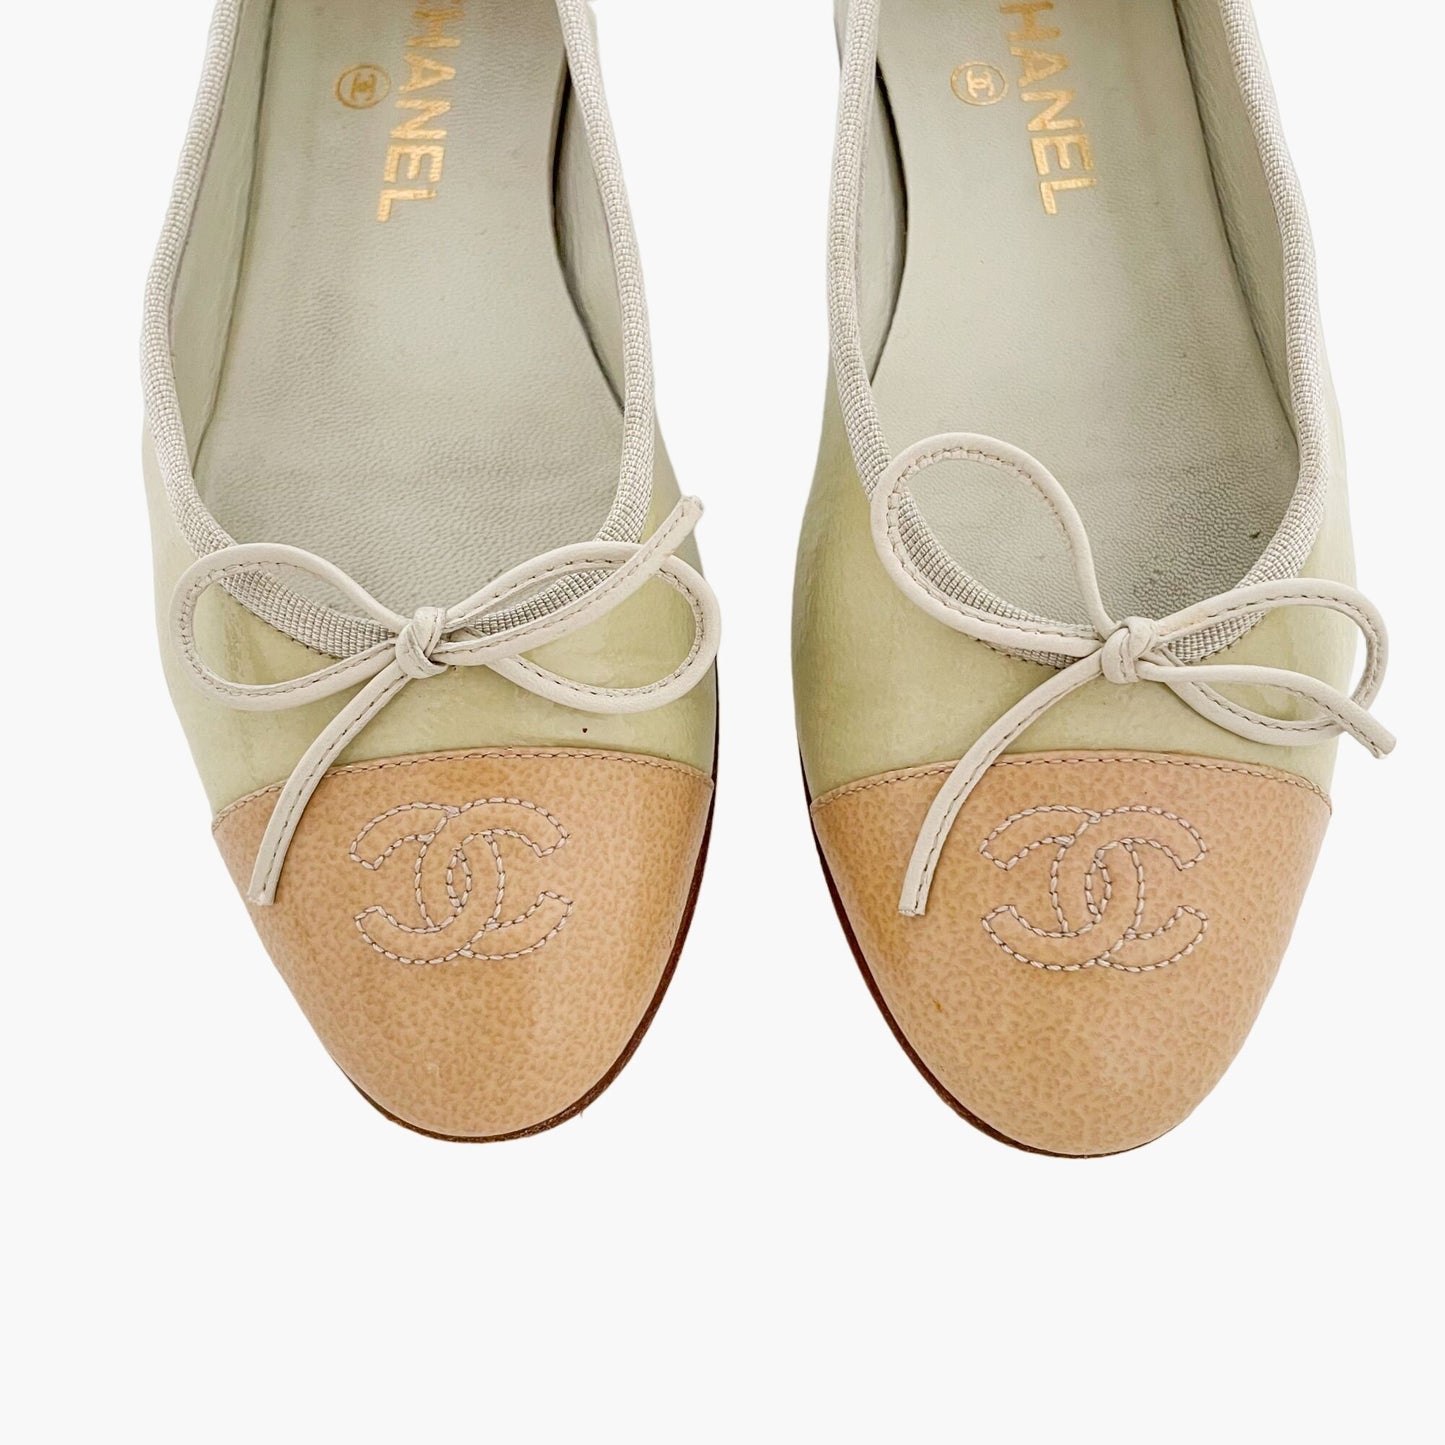 Chanel CC Cap Toe Ballet Flats in Pastel Yellow/Beige Size 37.5